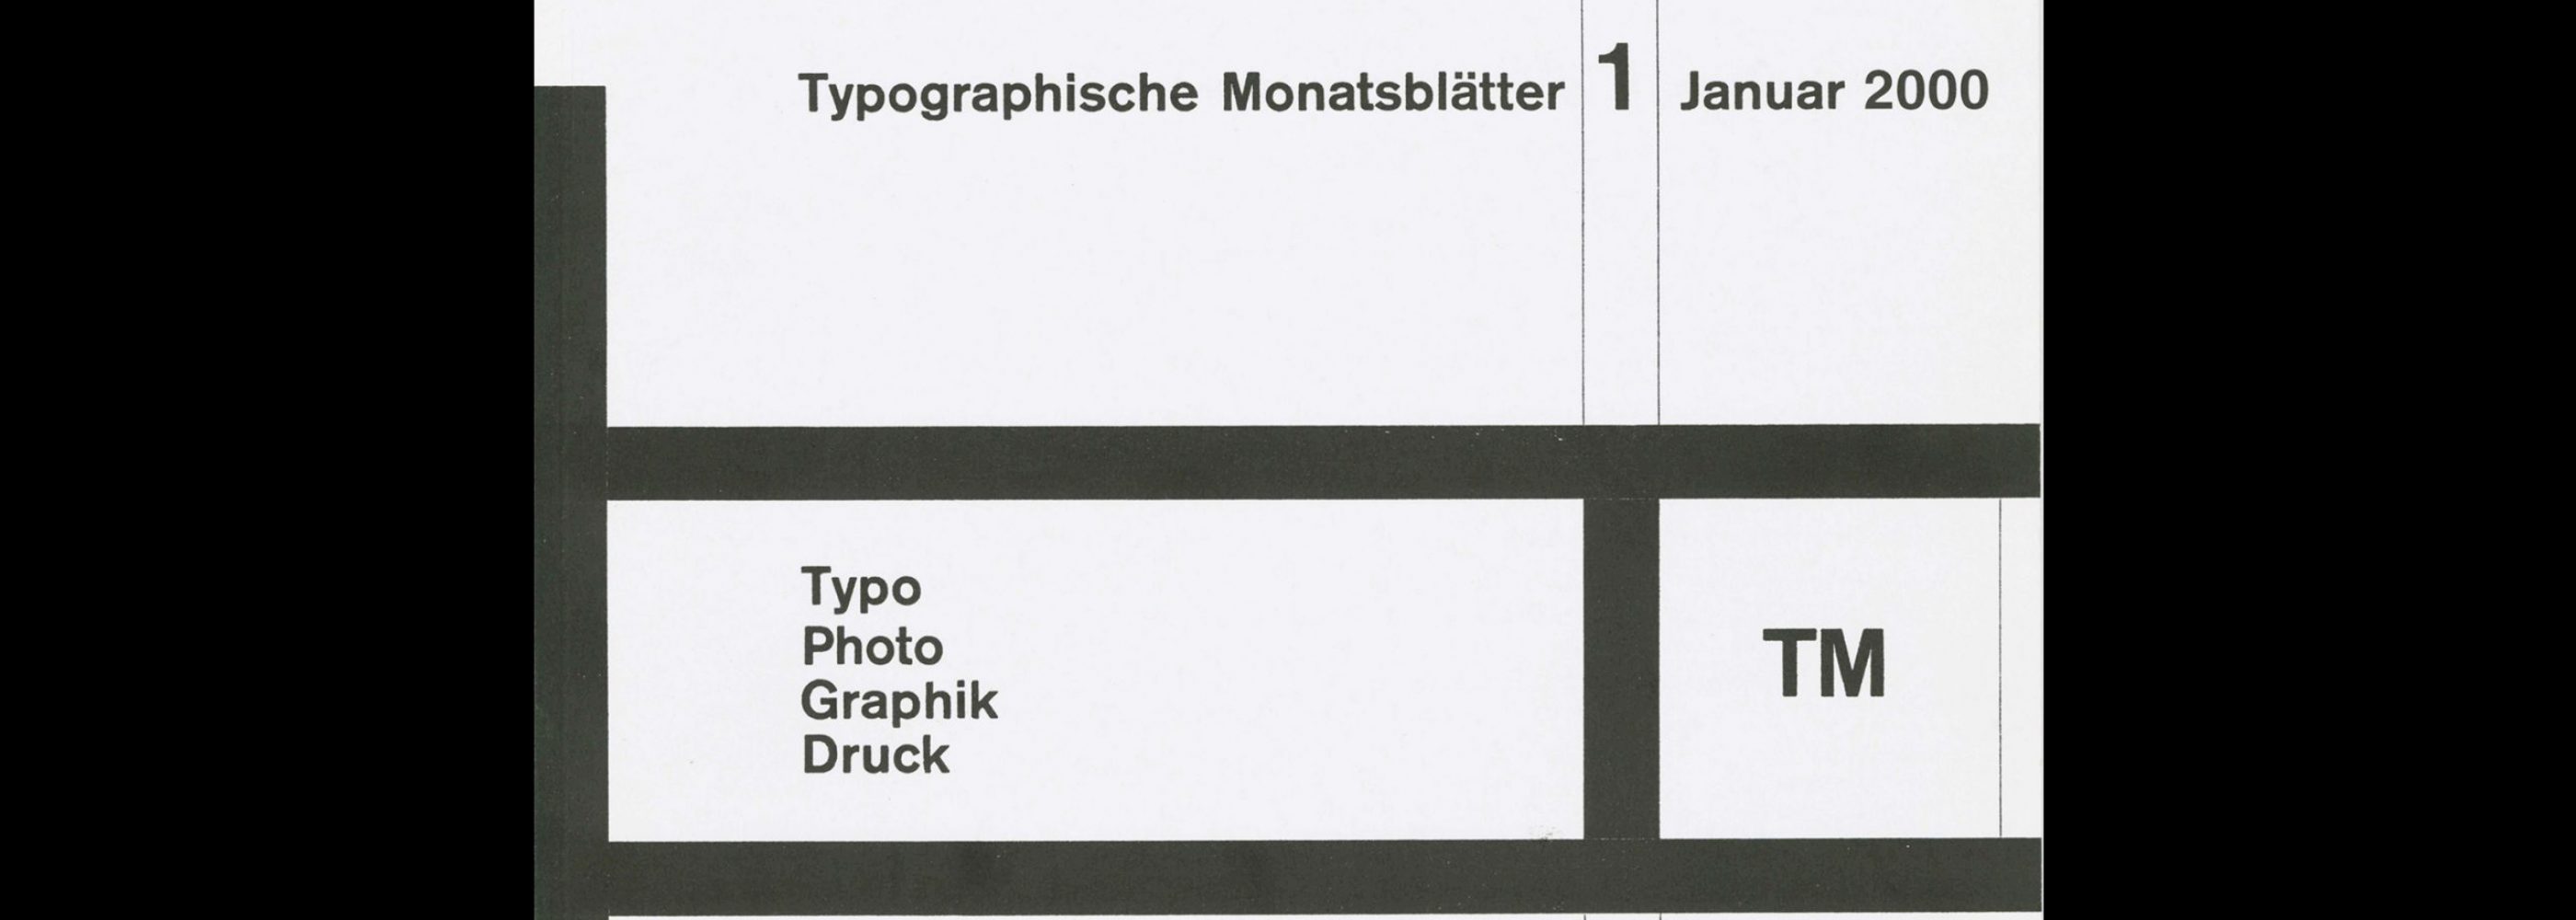 Typografische Monatsblätter, 1, 2000. Cover design by Richard Paul Lohse